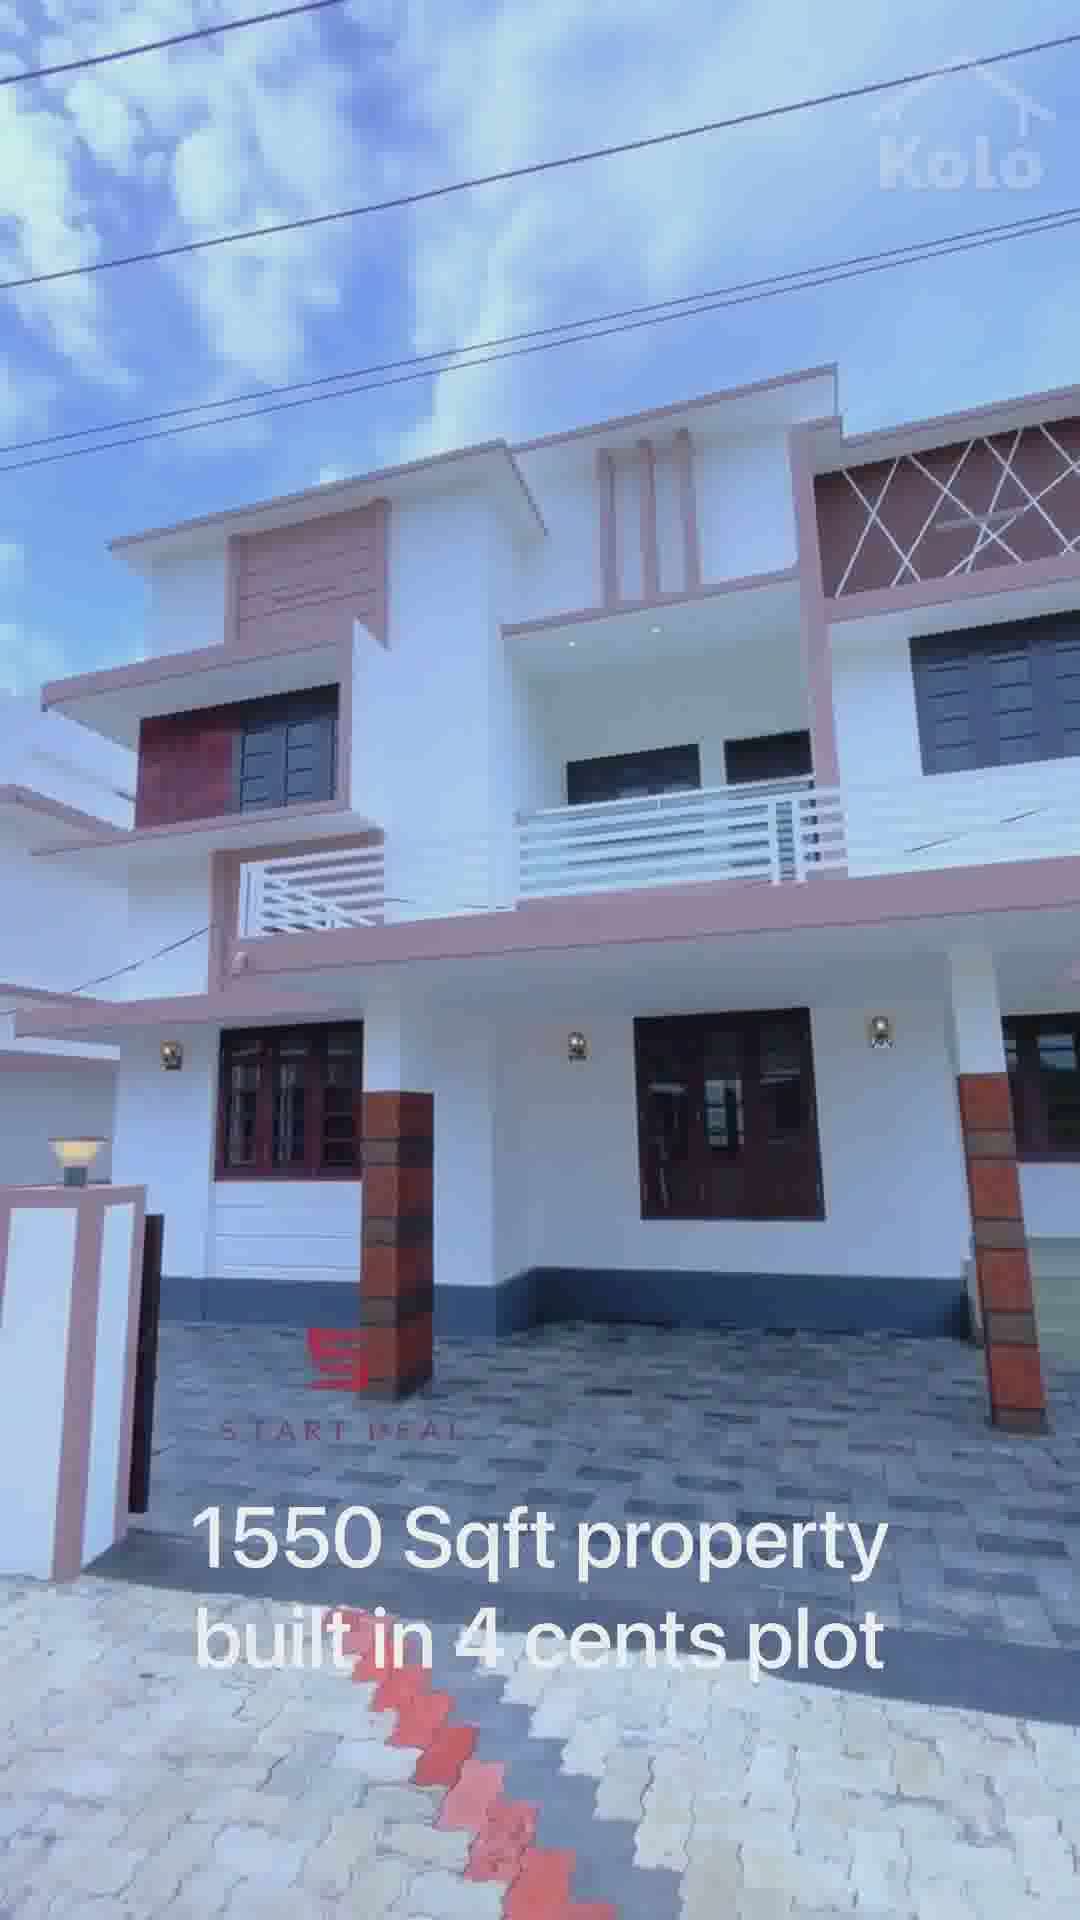 3BHK | 1550 Sqft | 4 Cents

Location: Pokkattupadi, Ernakulam

Credits: Start Deal
@startdealofficial
Email: 360startdeal@gmail.com
For More Details: Call :phone: 9072131728

Kolo - India’s Largest Home Construction Community :house:

#home #dream #keralahouse #koloapp #keralagram #homeinspiration #homesweethome #home #house #dreamhome #dreamhouse #home #keralahouse #residence #residencedesign #house #reelitfeelit #keralagodsowncountry #homedecor #homedesign #mallu #keralam #homedecoration #homedesignideas #keralahomes #homedecor #homes #traditional #kerala #homesweethome #architecturedesign #architecture #keralaarchitecture